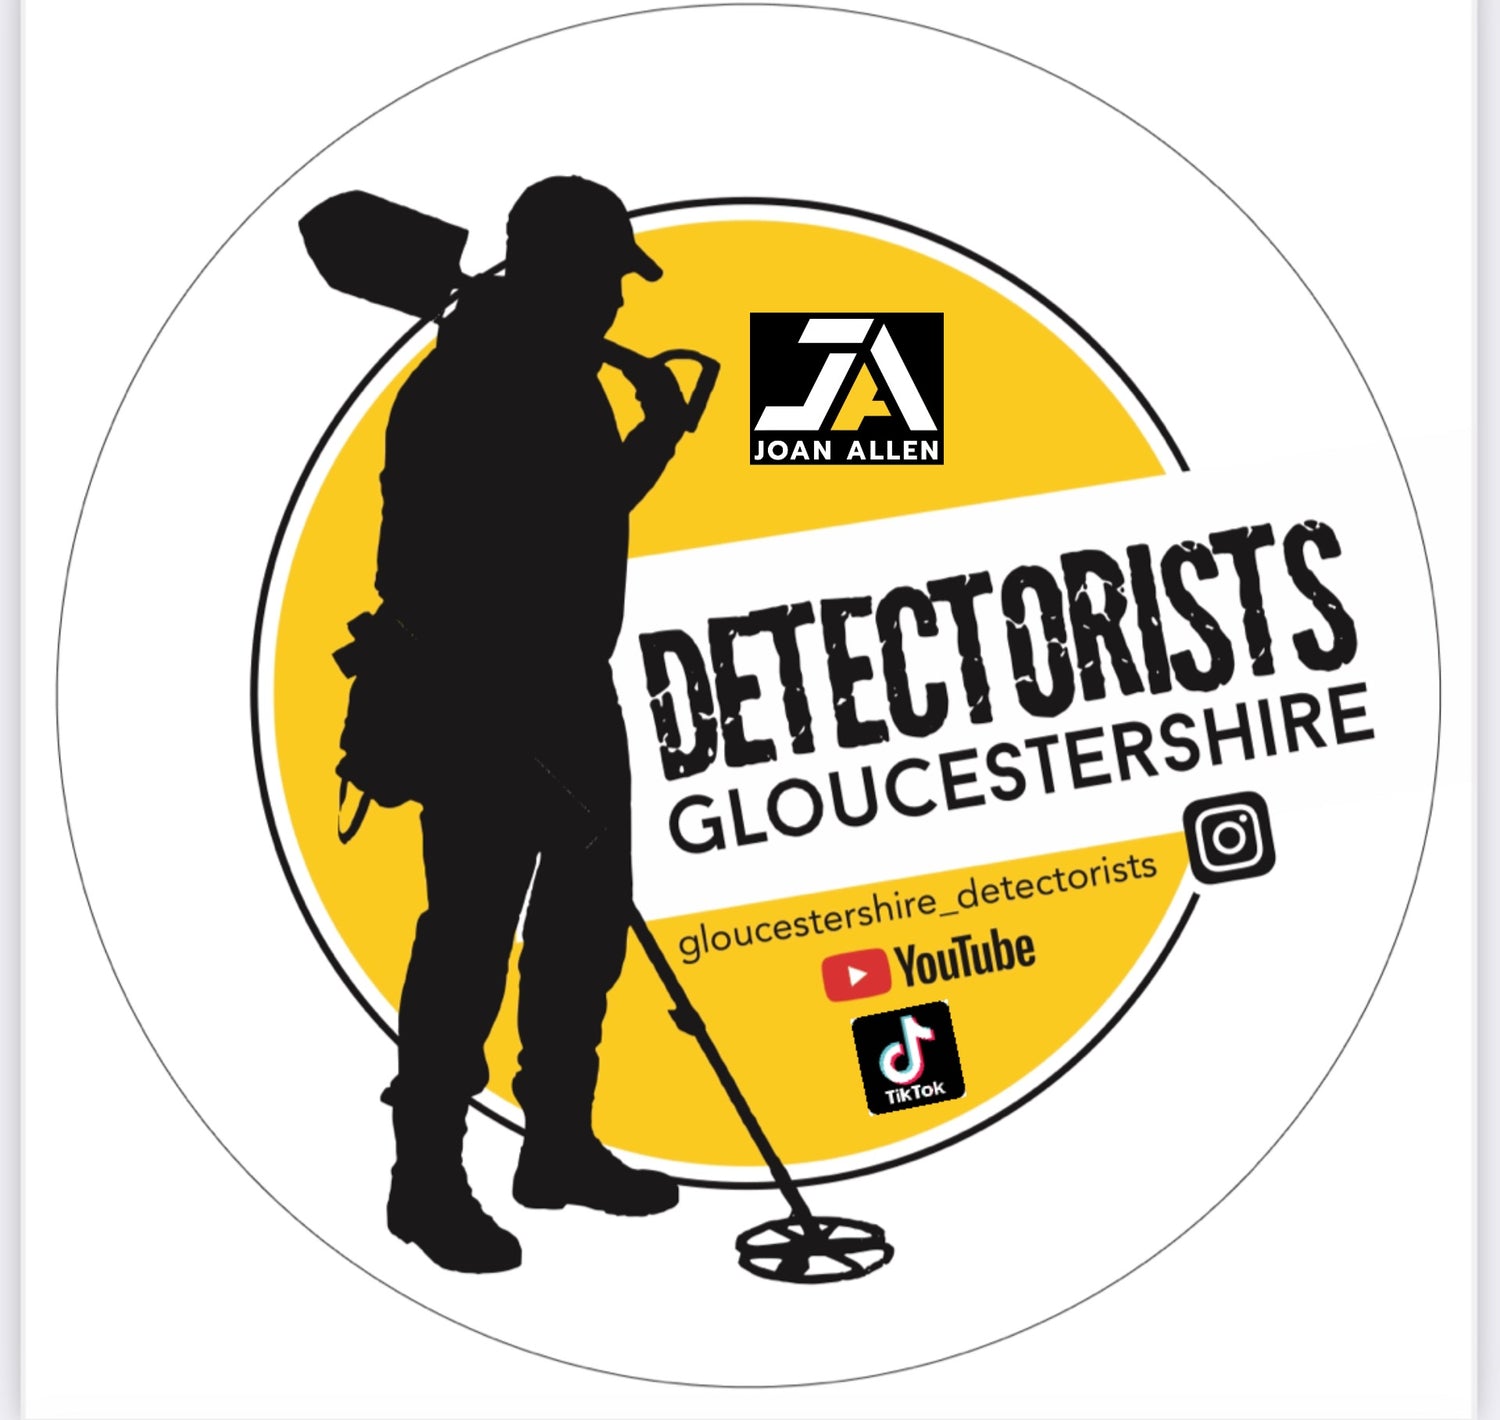 Gloucestershire Detectorists/Metal Detecting